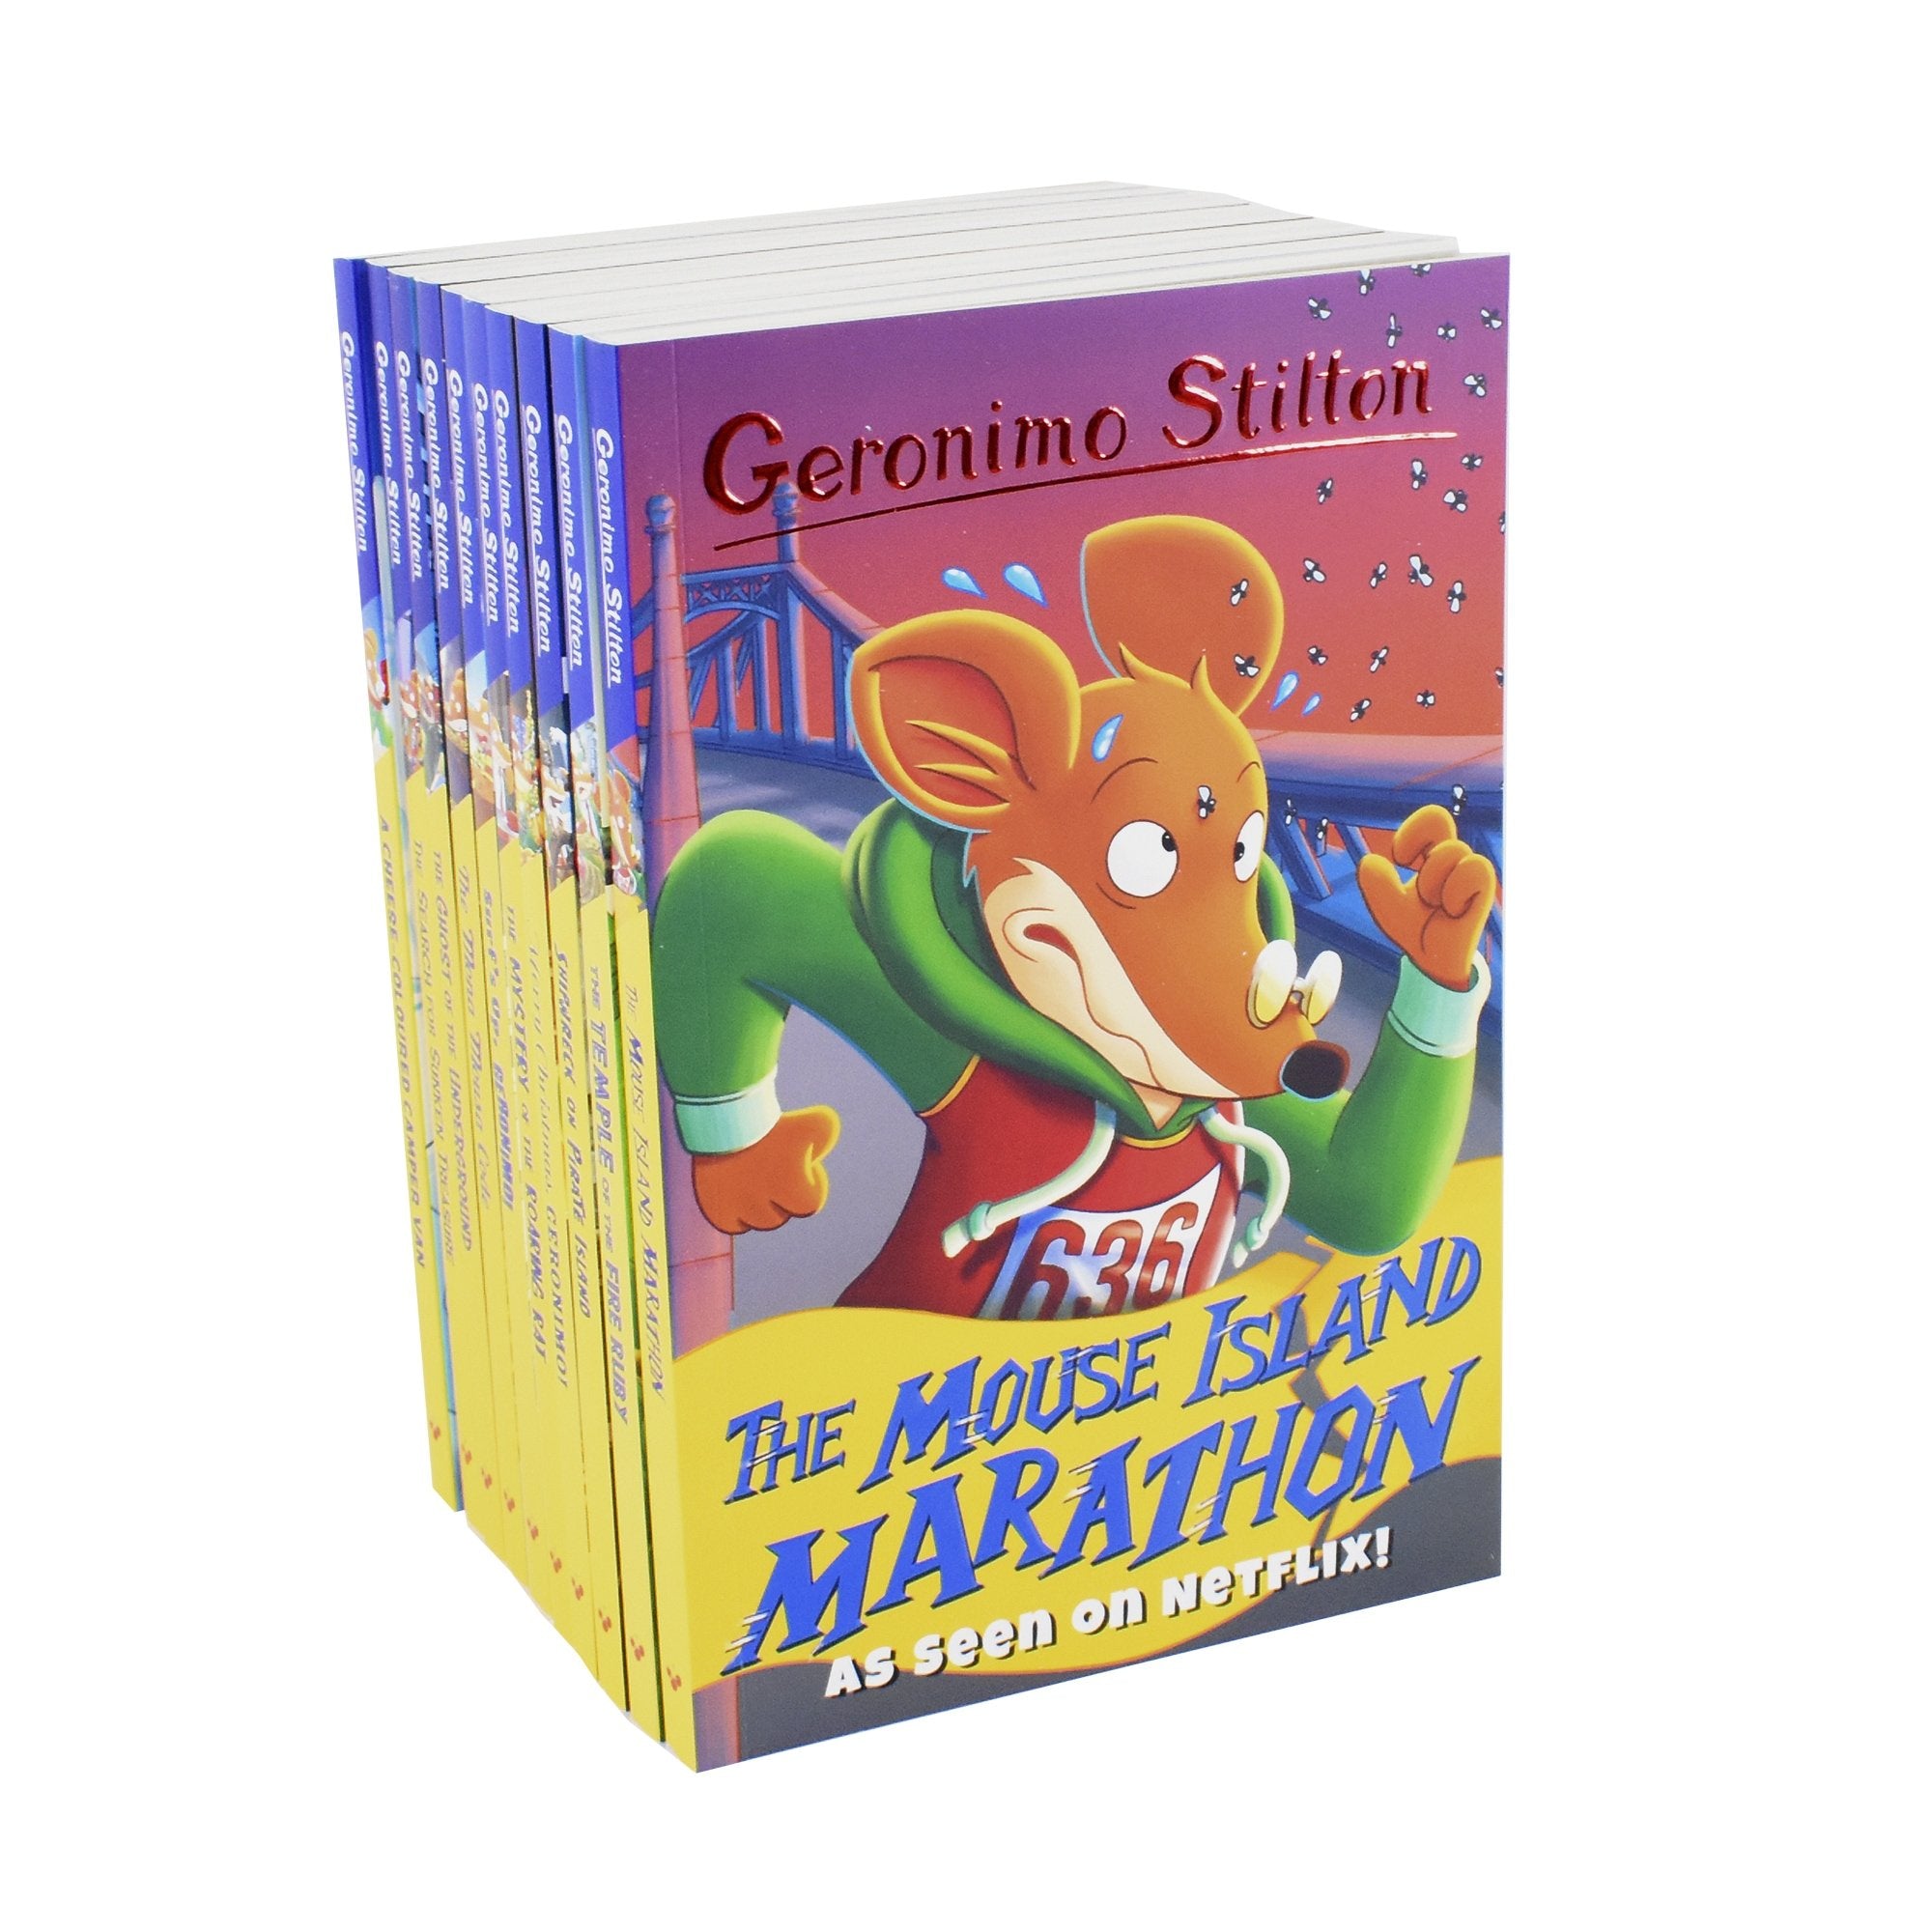 Geronimo Stilton 10 Books Series 3 Children Collection Paperback Box Set - St Stephens Books